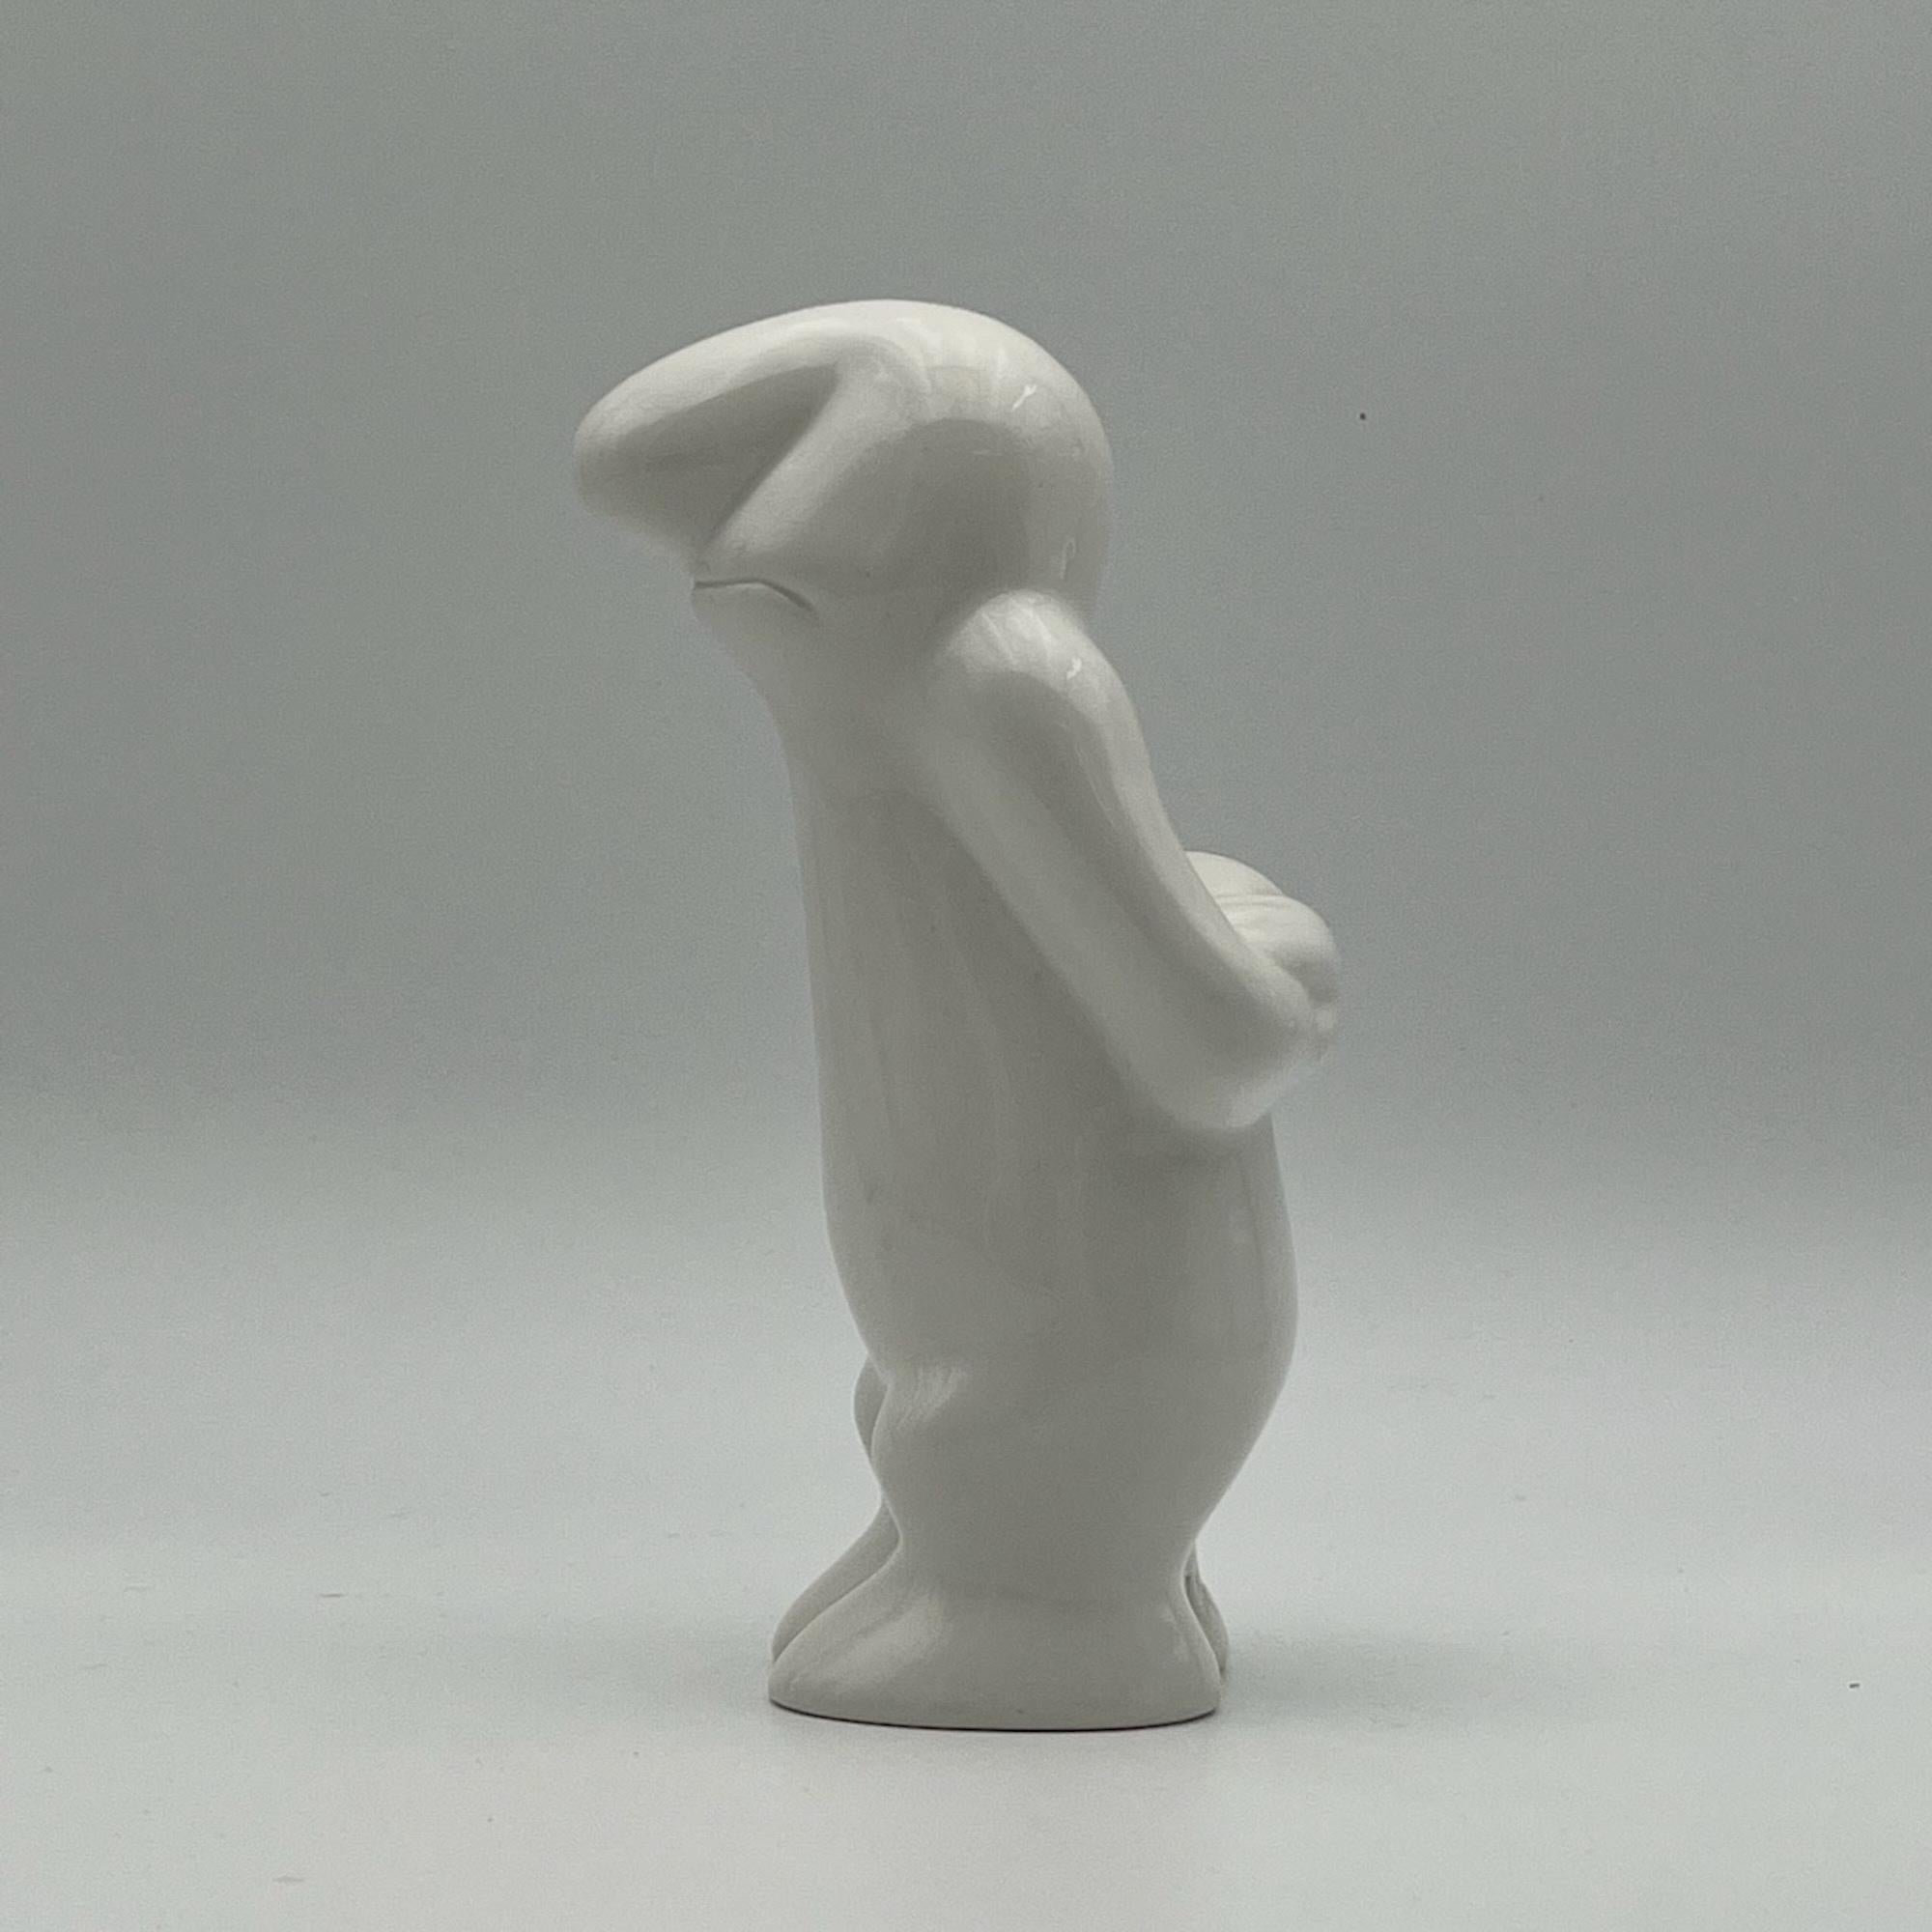 Italian Osvaldo Cavandoli La Linea 'brooding' iconic ceramic figurine - 1960s